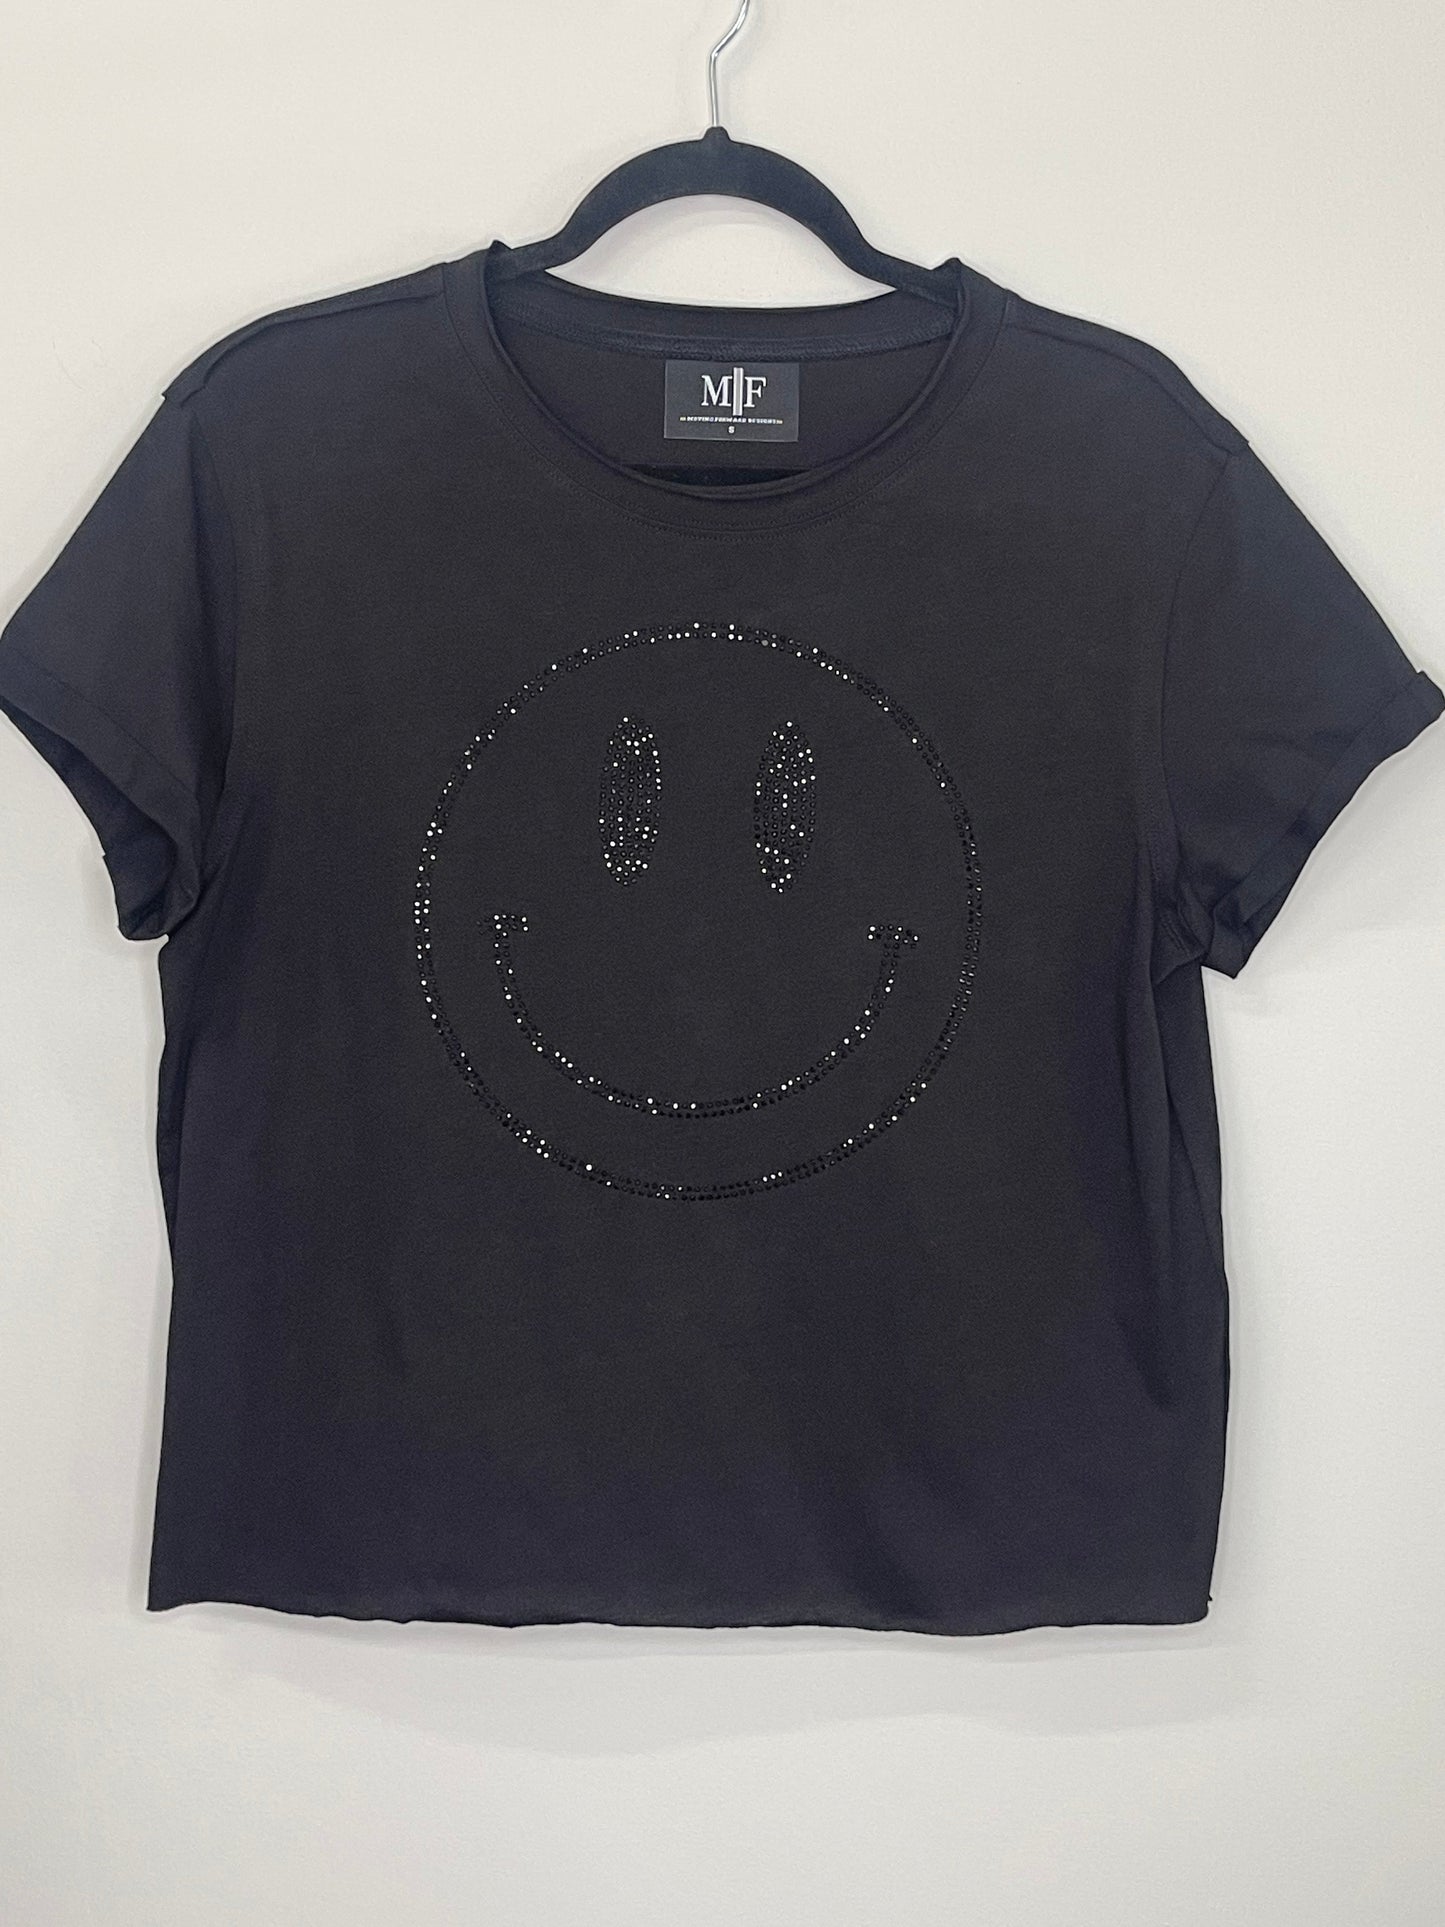 T-Shirt, Raw Edge Black, Black Crystal Smiley